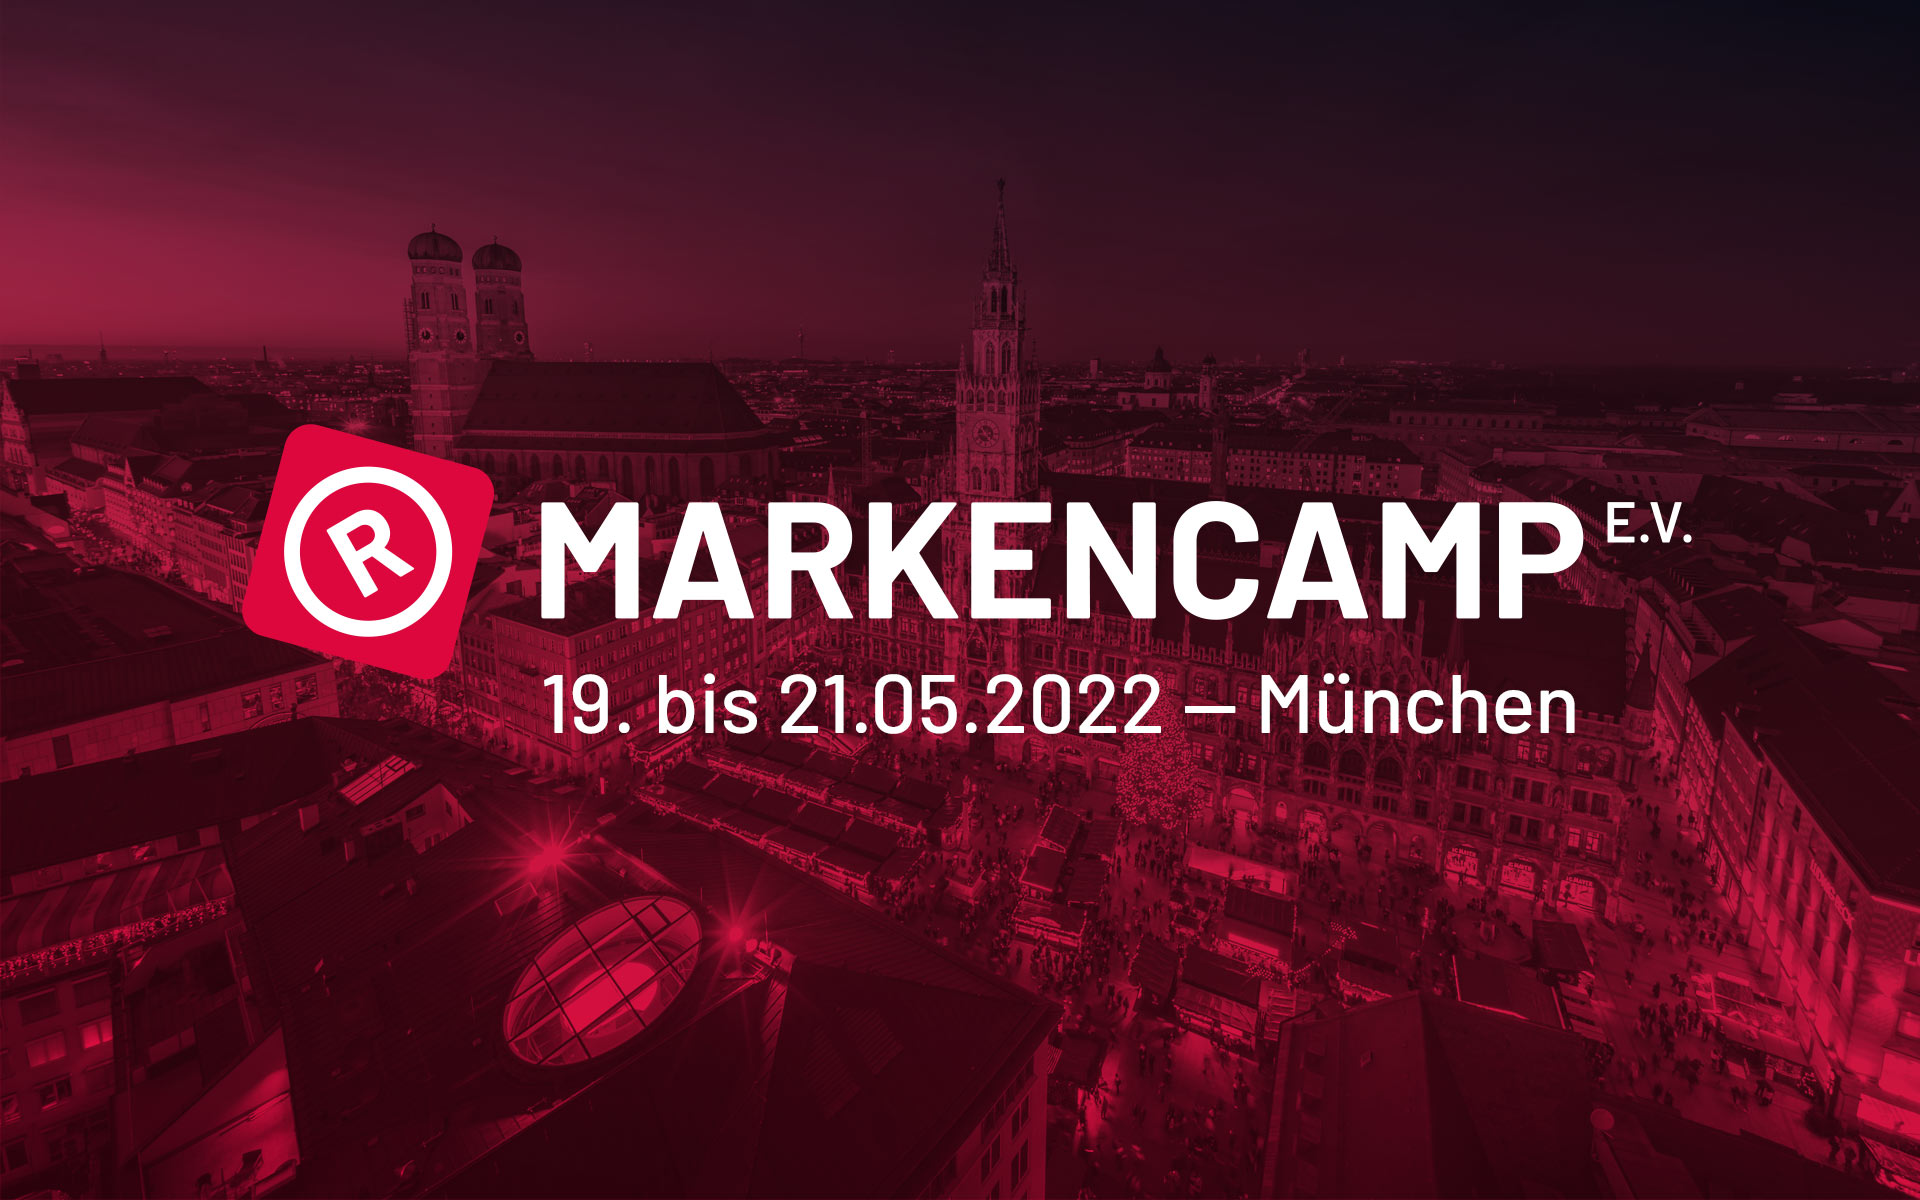 Markencamp, Markencamp 2022, stay golden, Botschafter, Carsten Prenger, Event, Markenevent, Plattform, Expertise